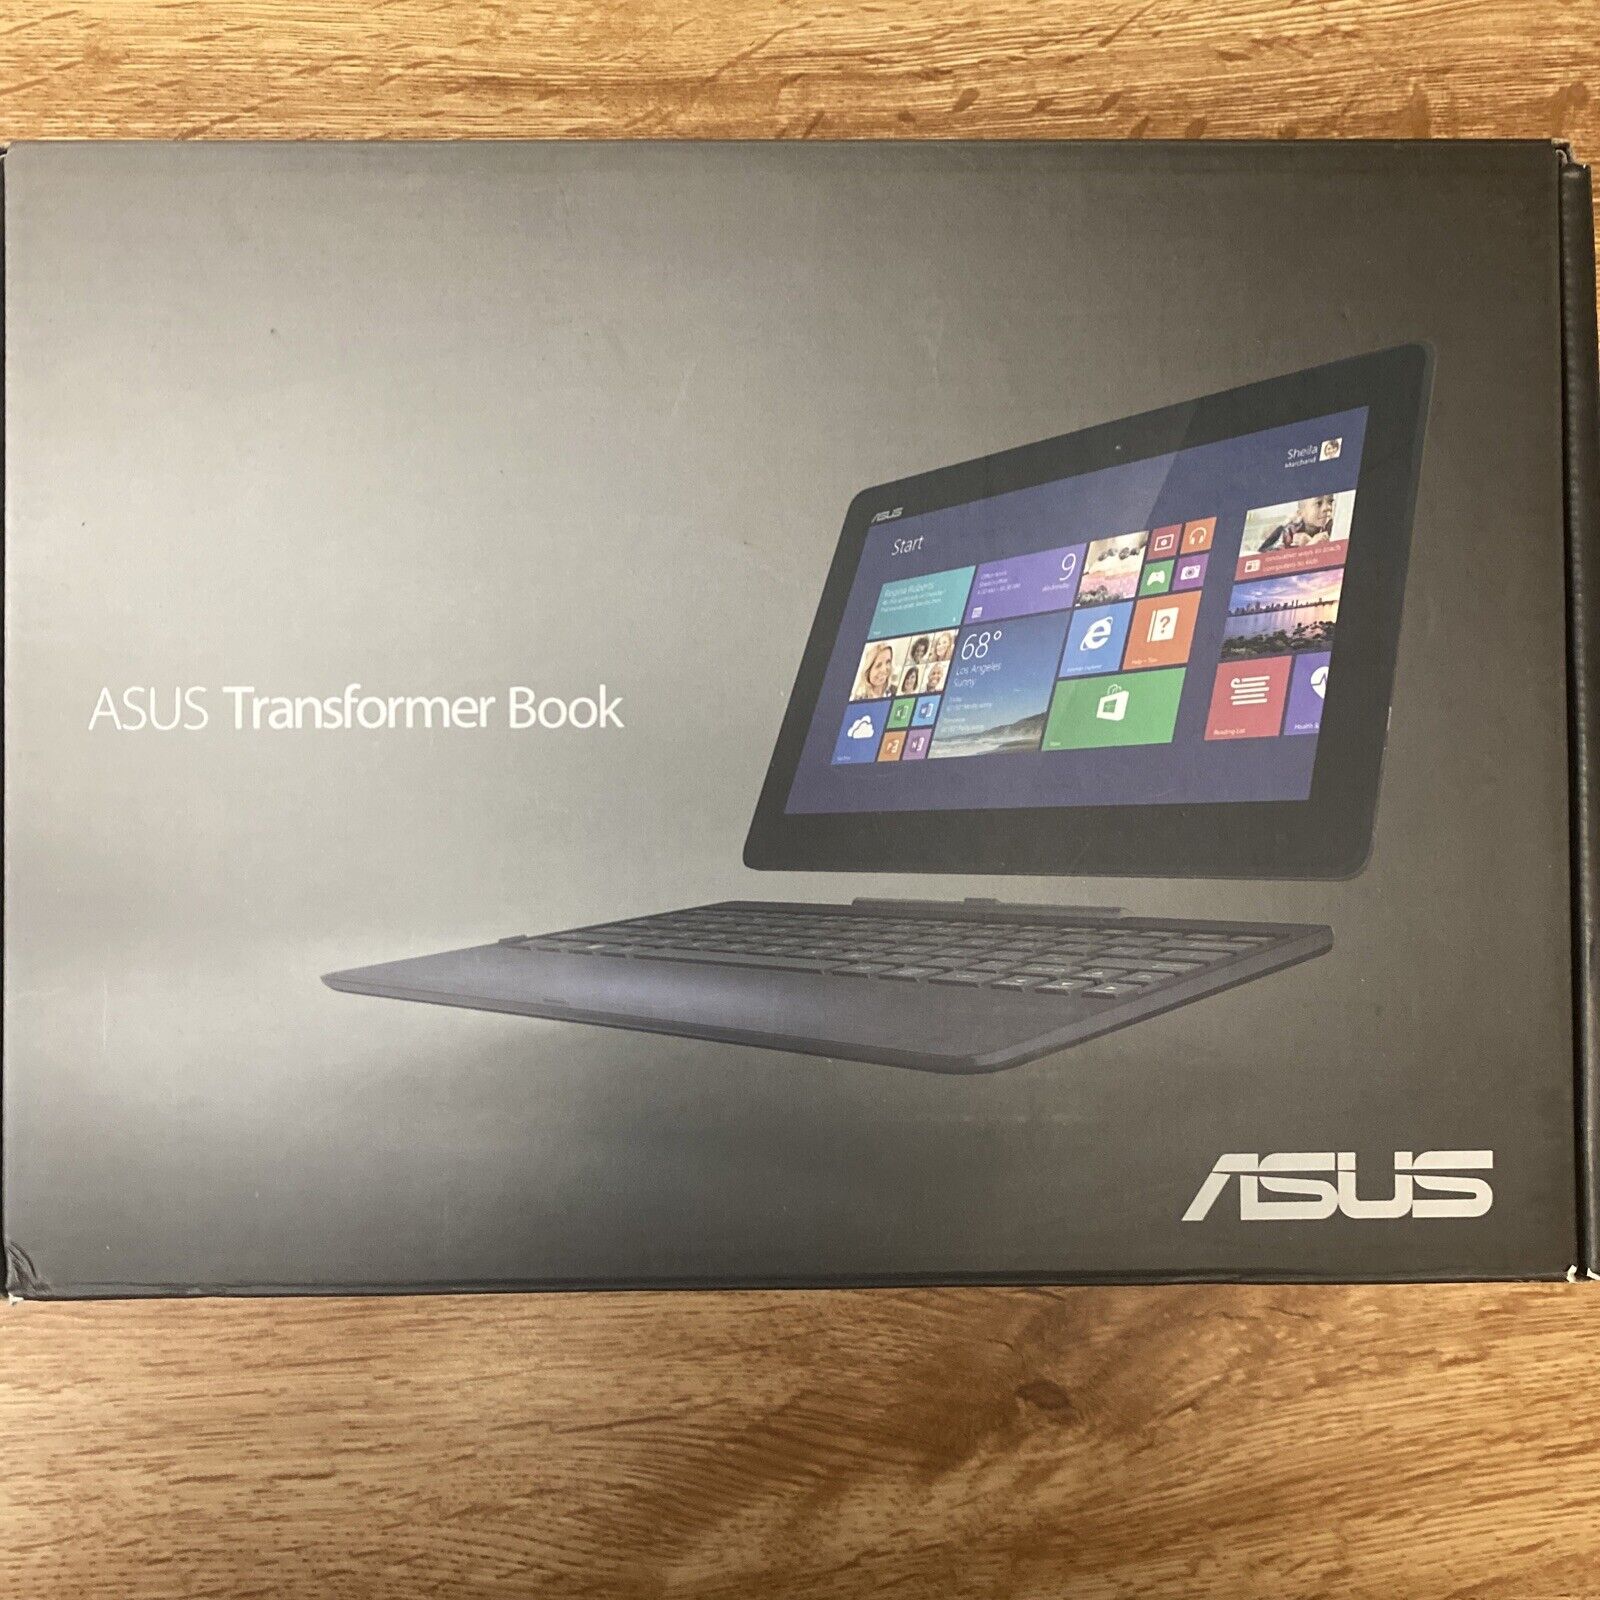 ASUS Transformer Book T100TA C2-edu 64GB  Intel Atom Quad-Core 2GB Win 8.1 pro